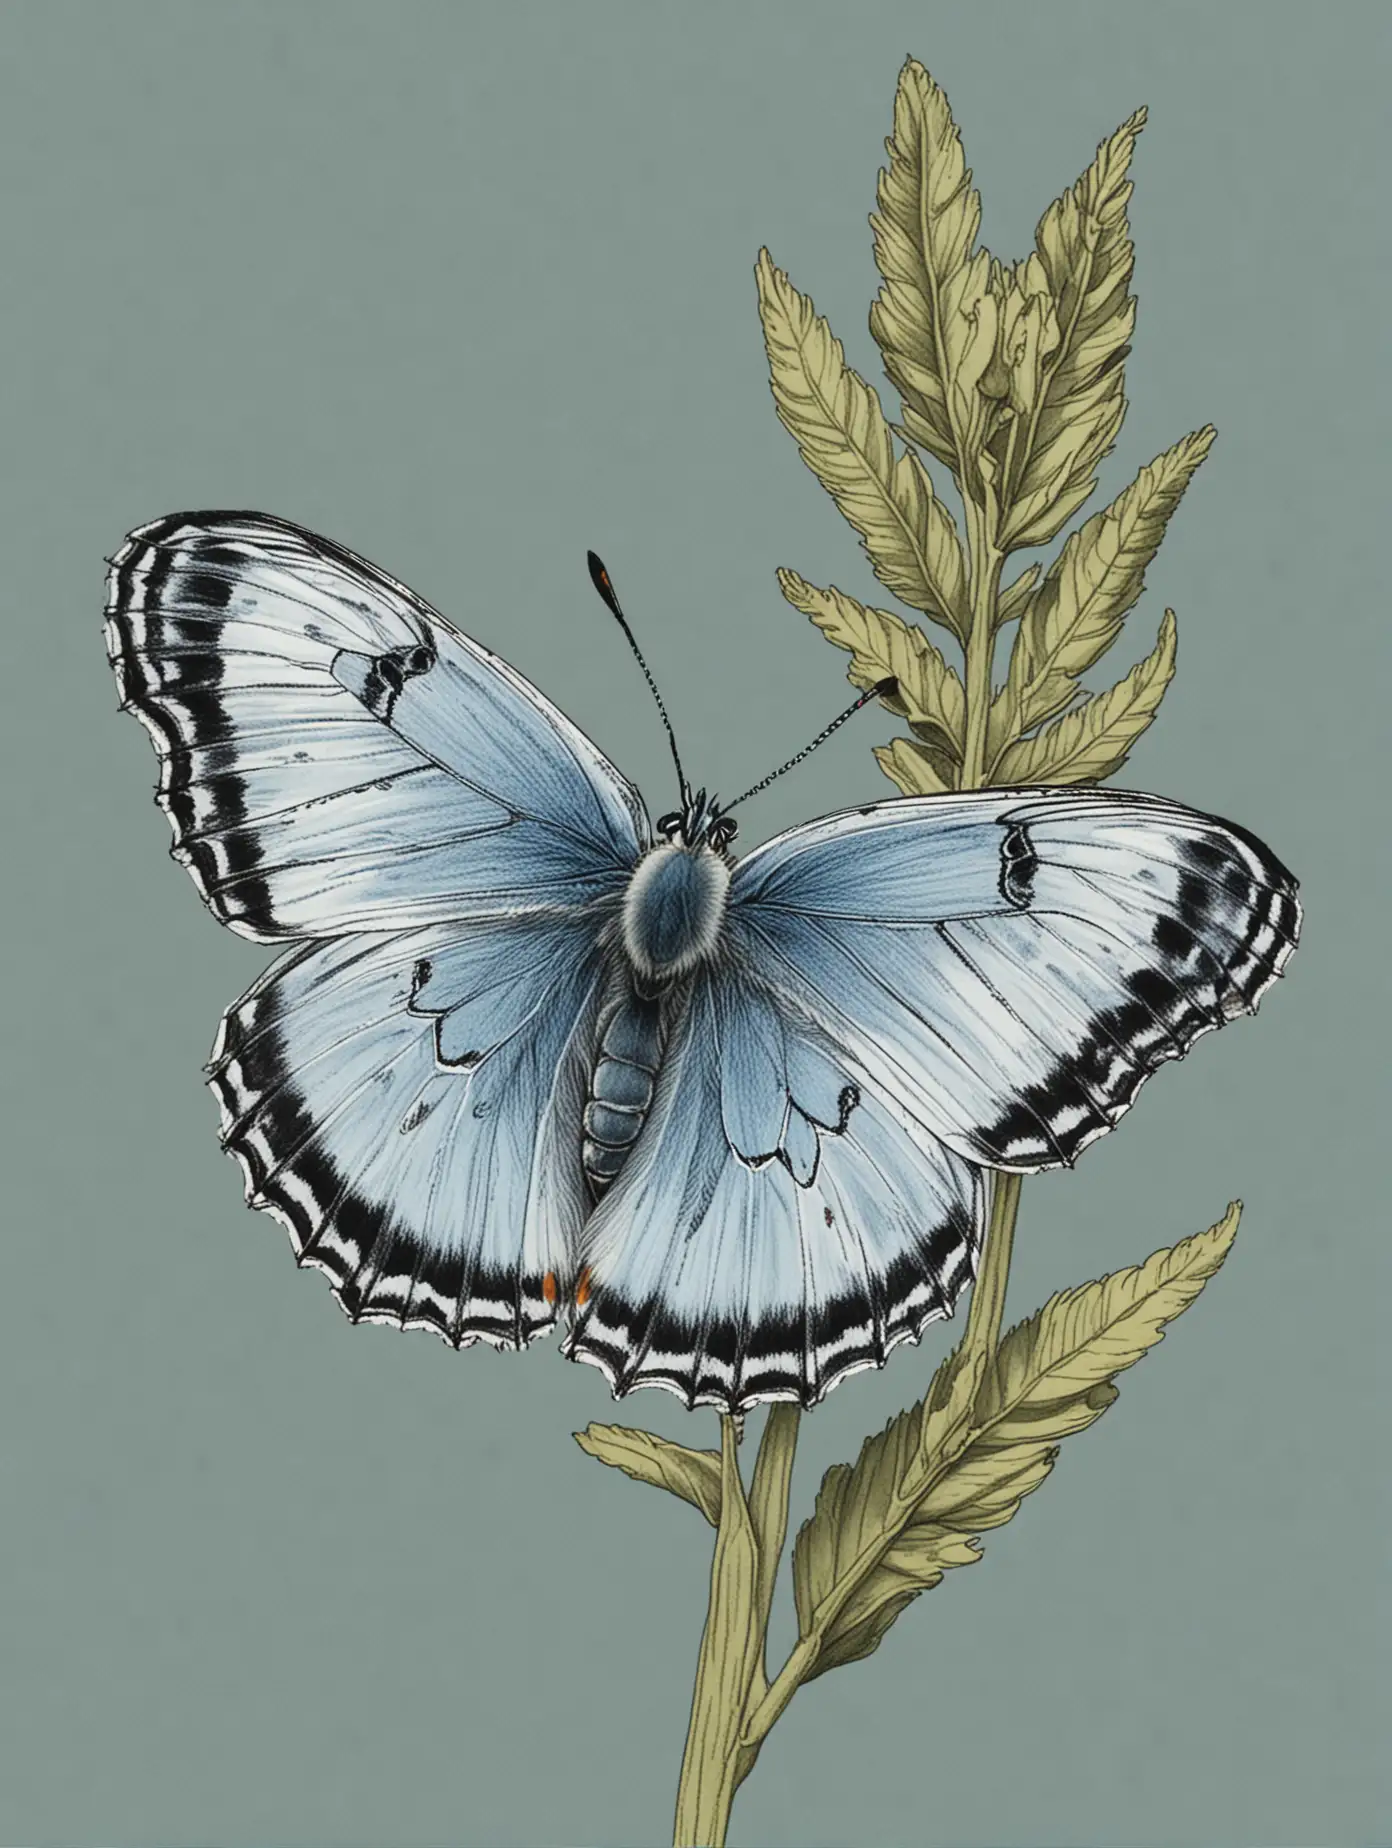 Karner Blue Butterfly Illustration in Audubon Style